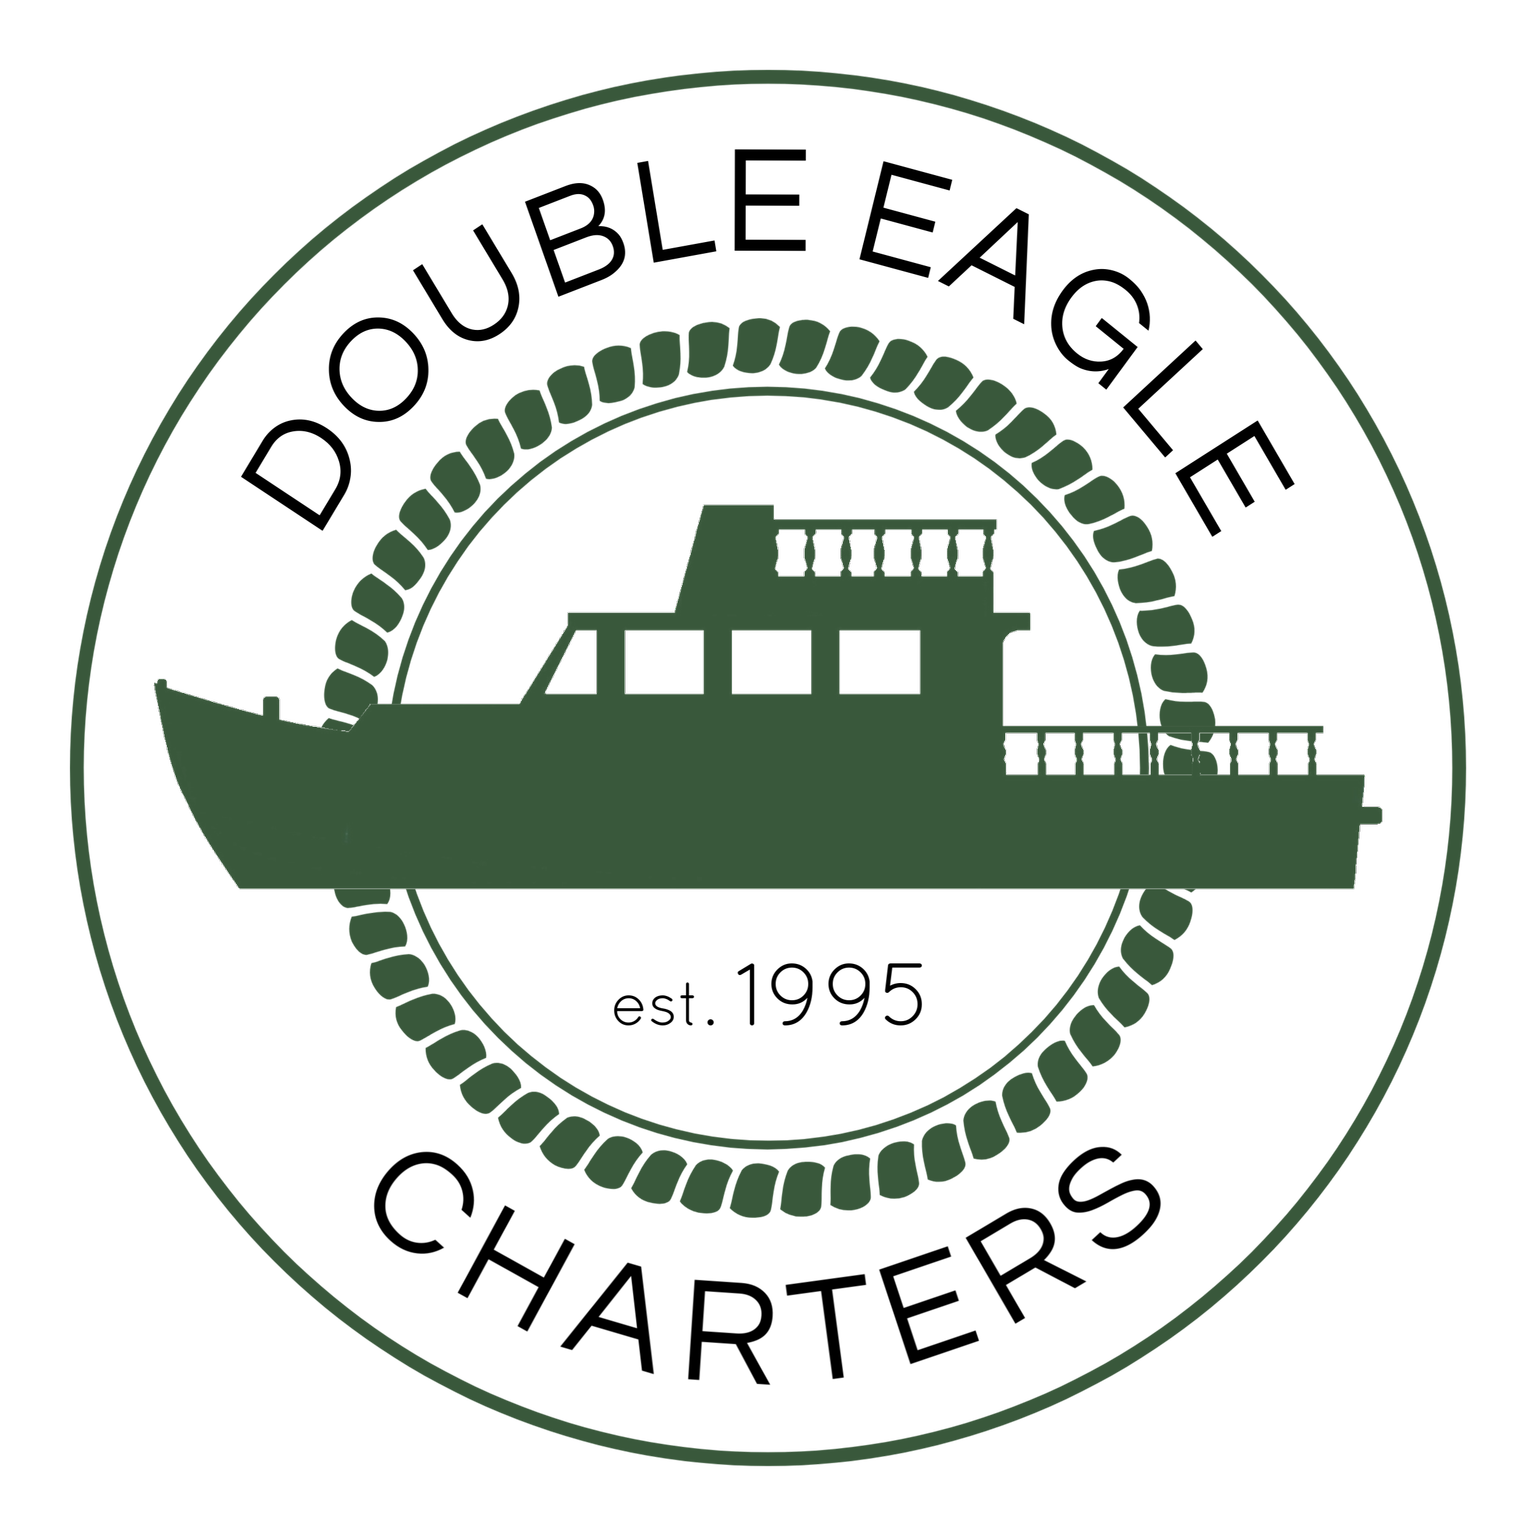 the double eagle charter logo.